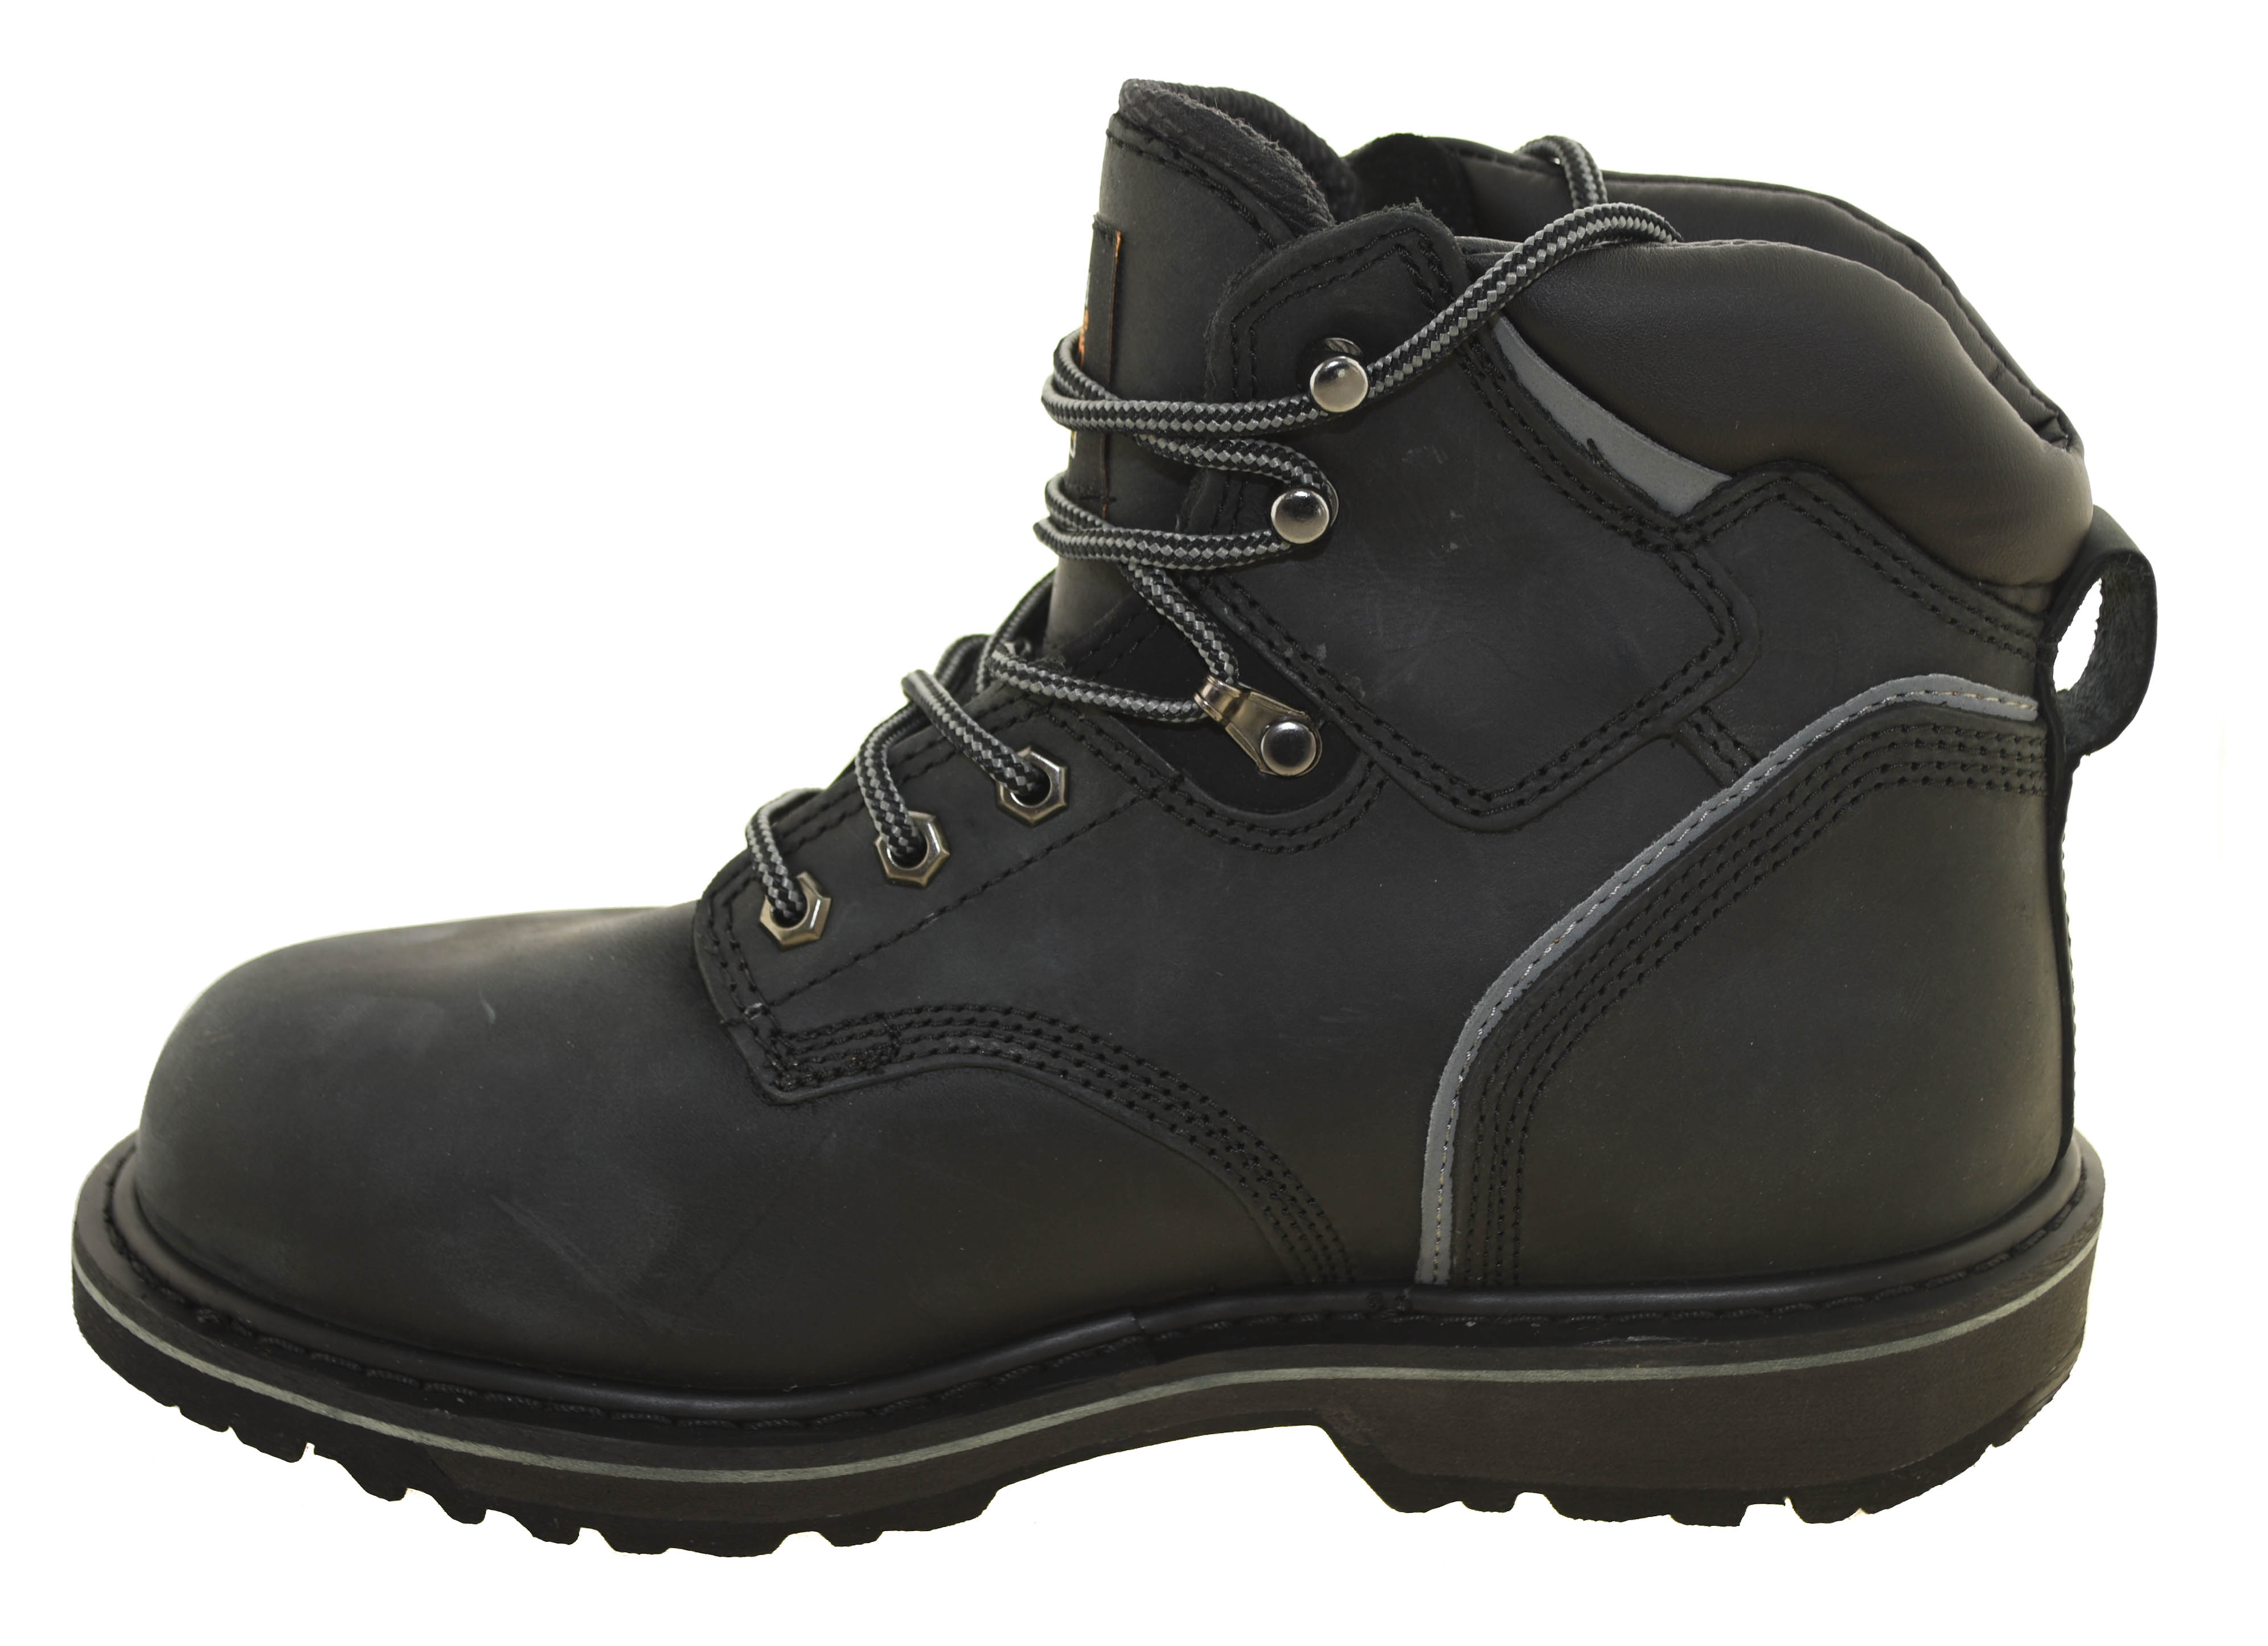 Timberland Pro Men's Pit Boss Steel Toe Work Boots 33032 Black | eBay